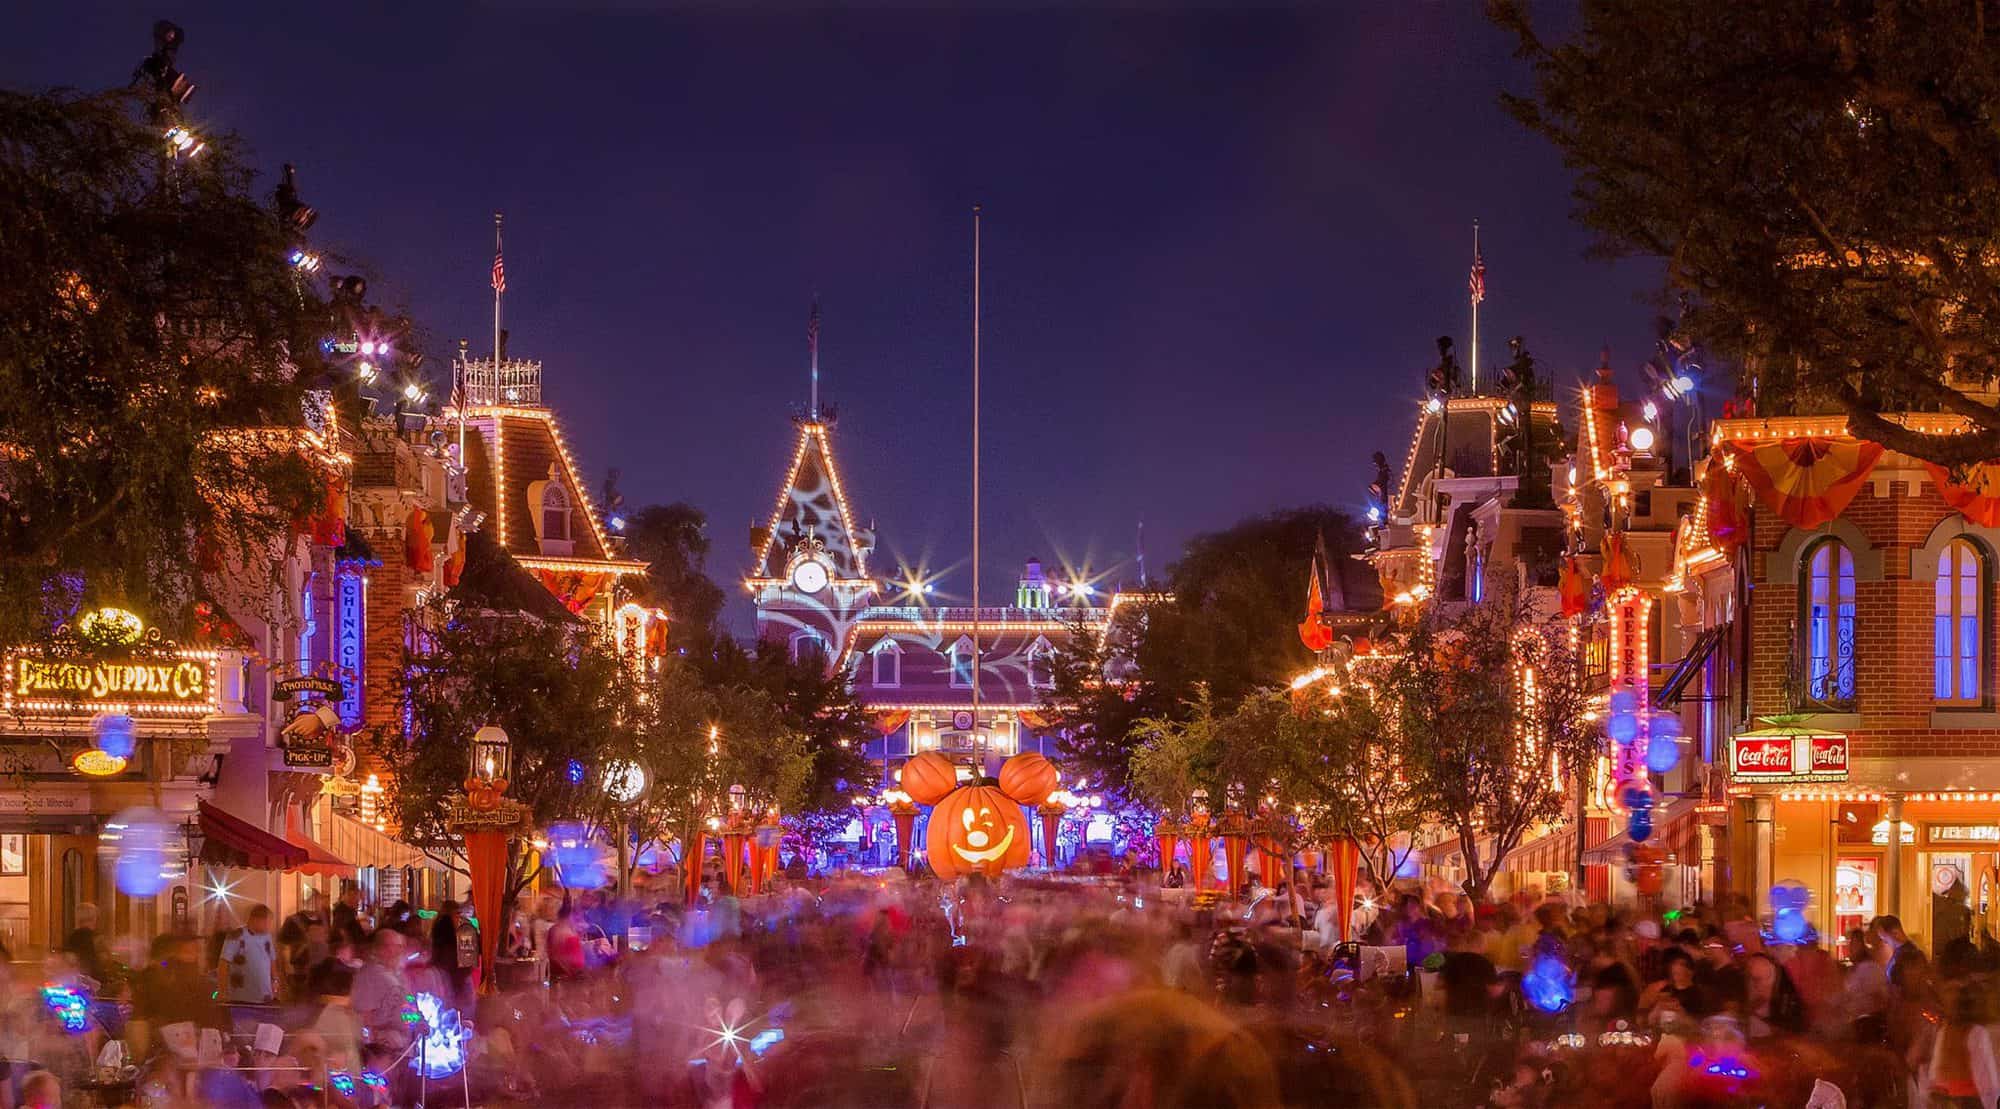 Magical halloween decorations disneyland to experience the Disney magic